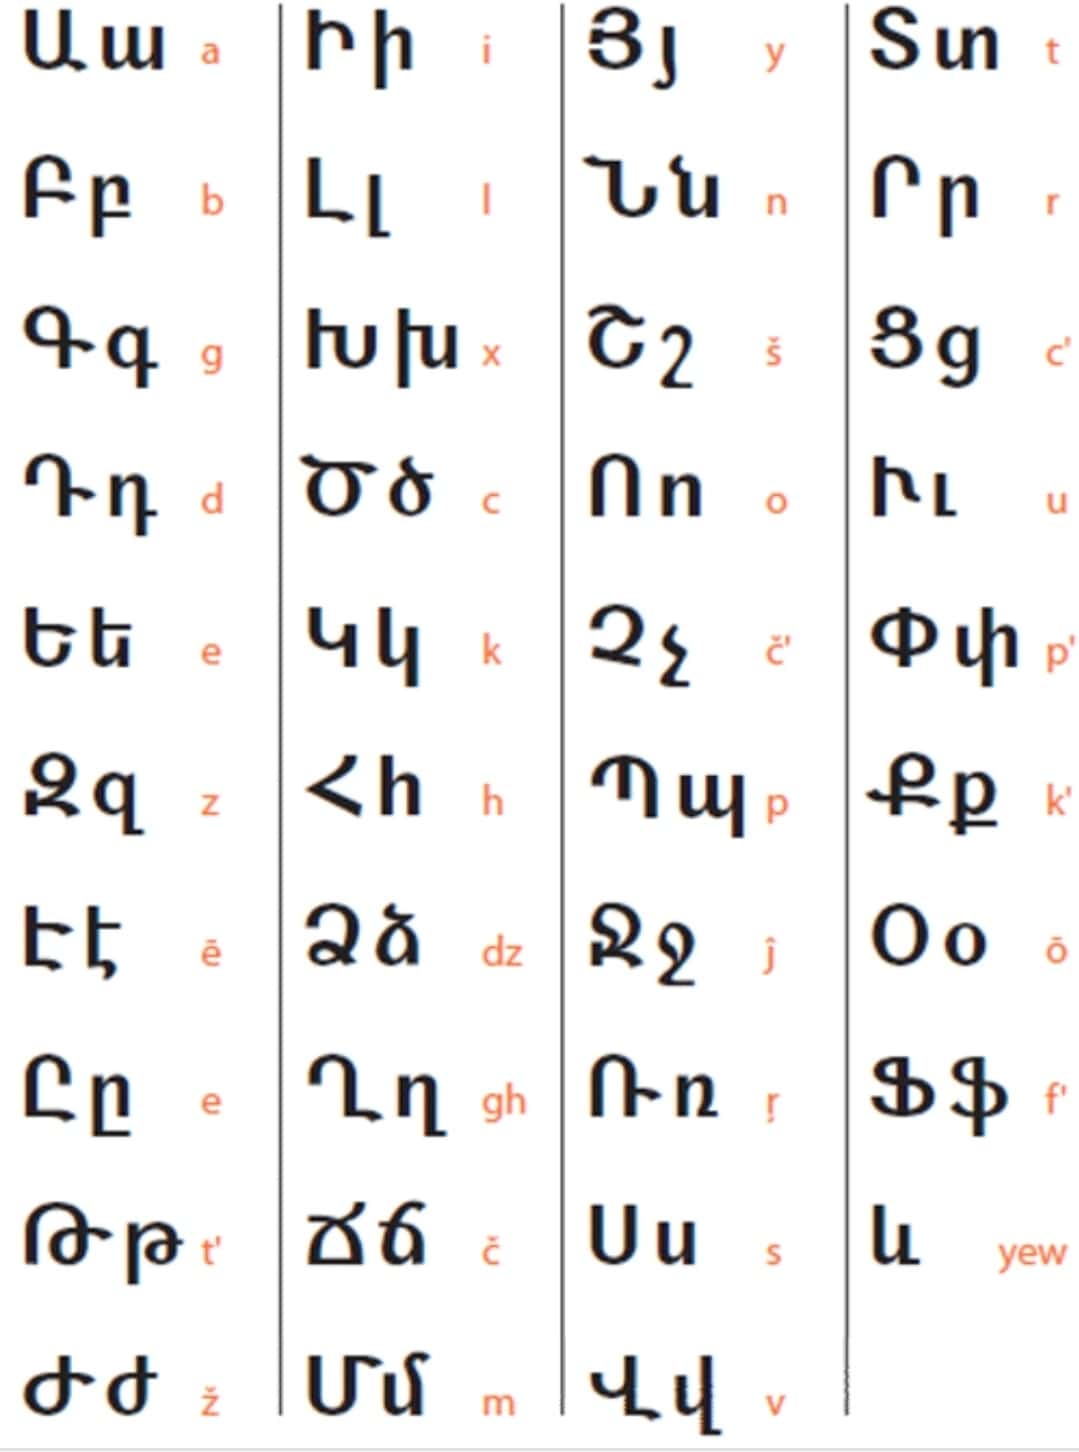 Armenian language, History, Alphabet & Dialects